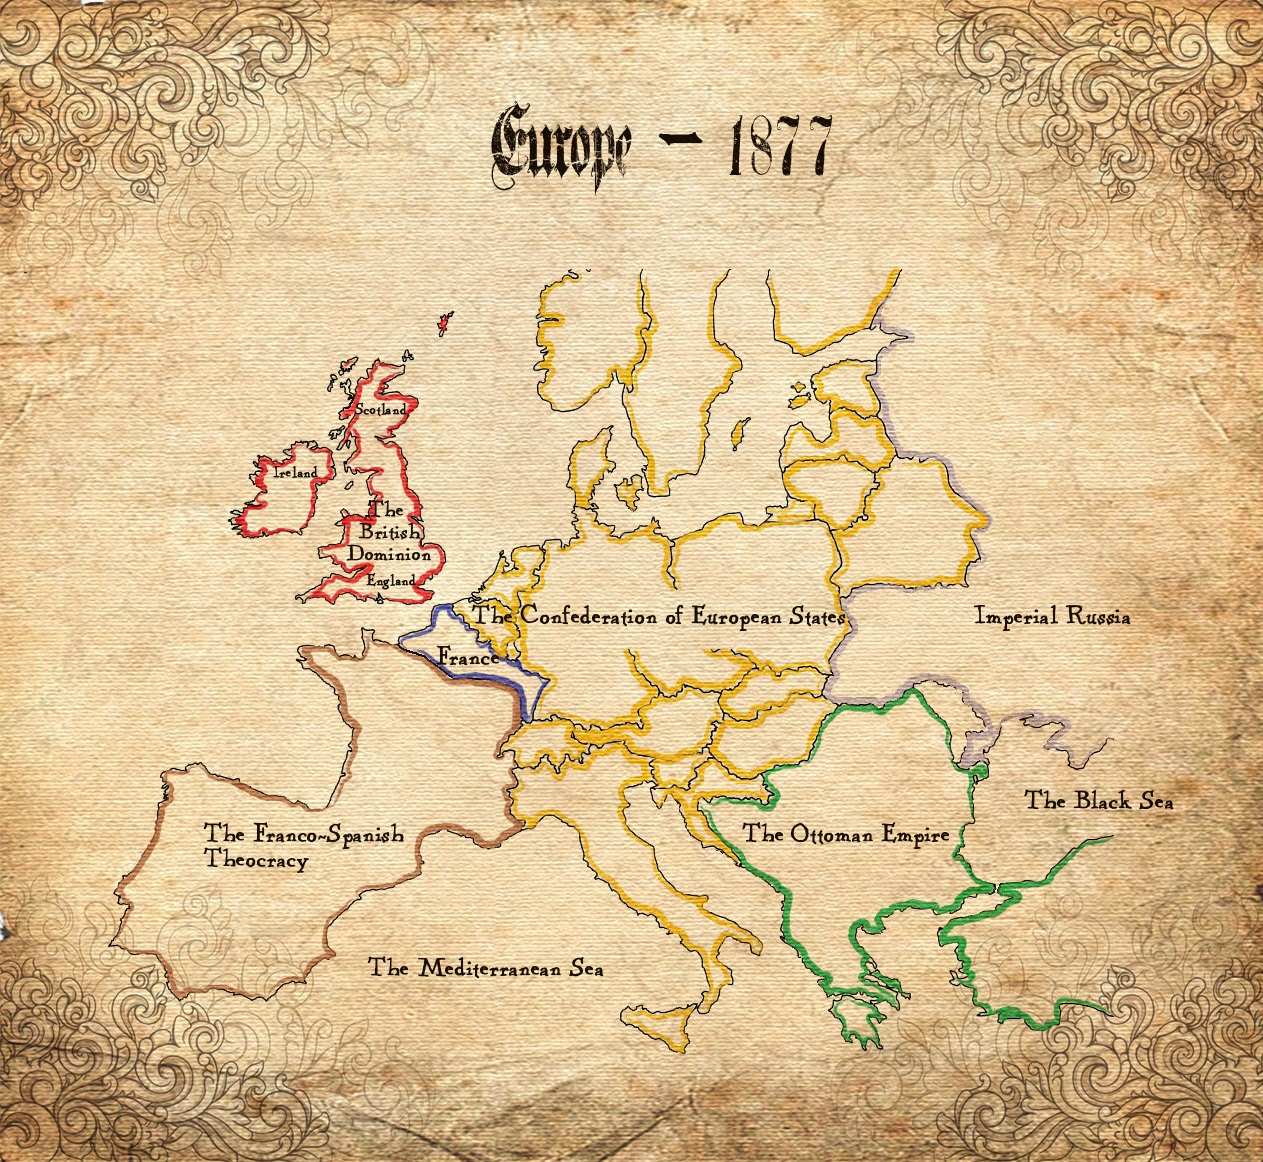 World of Calamity - Europe 1877